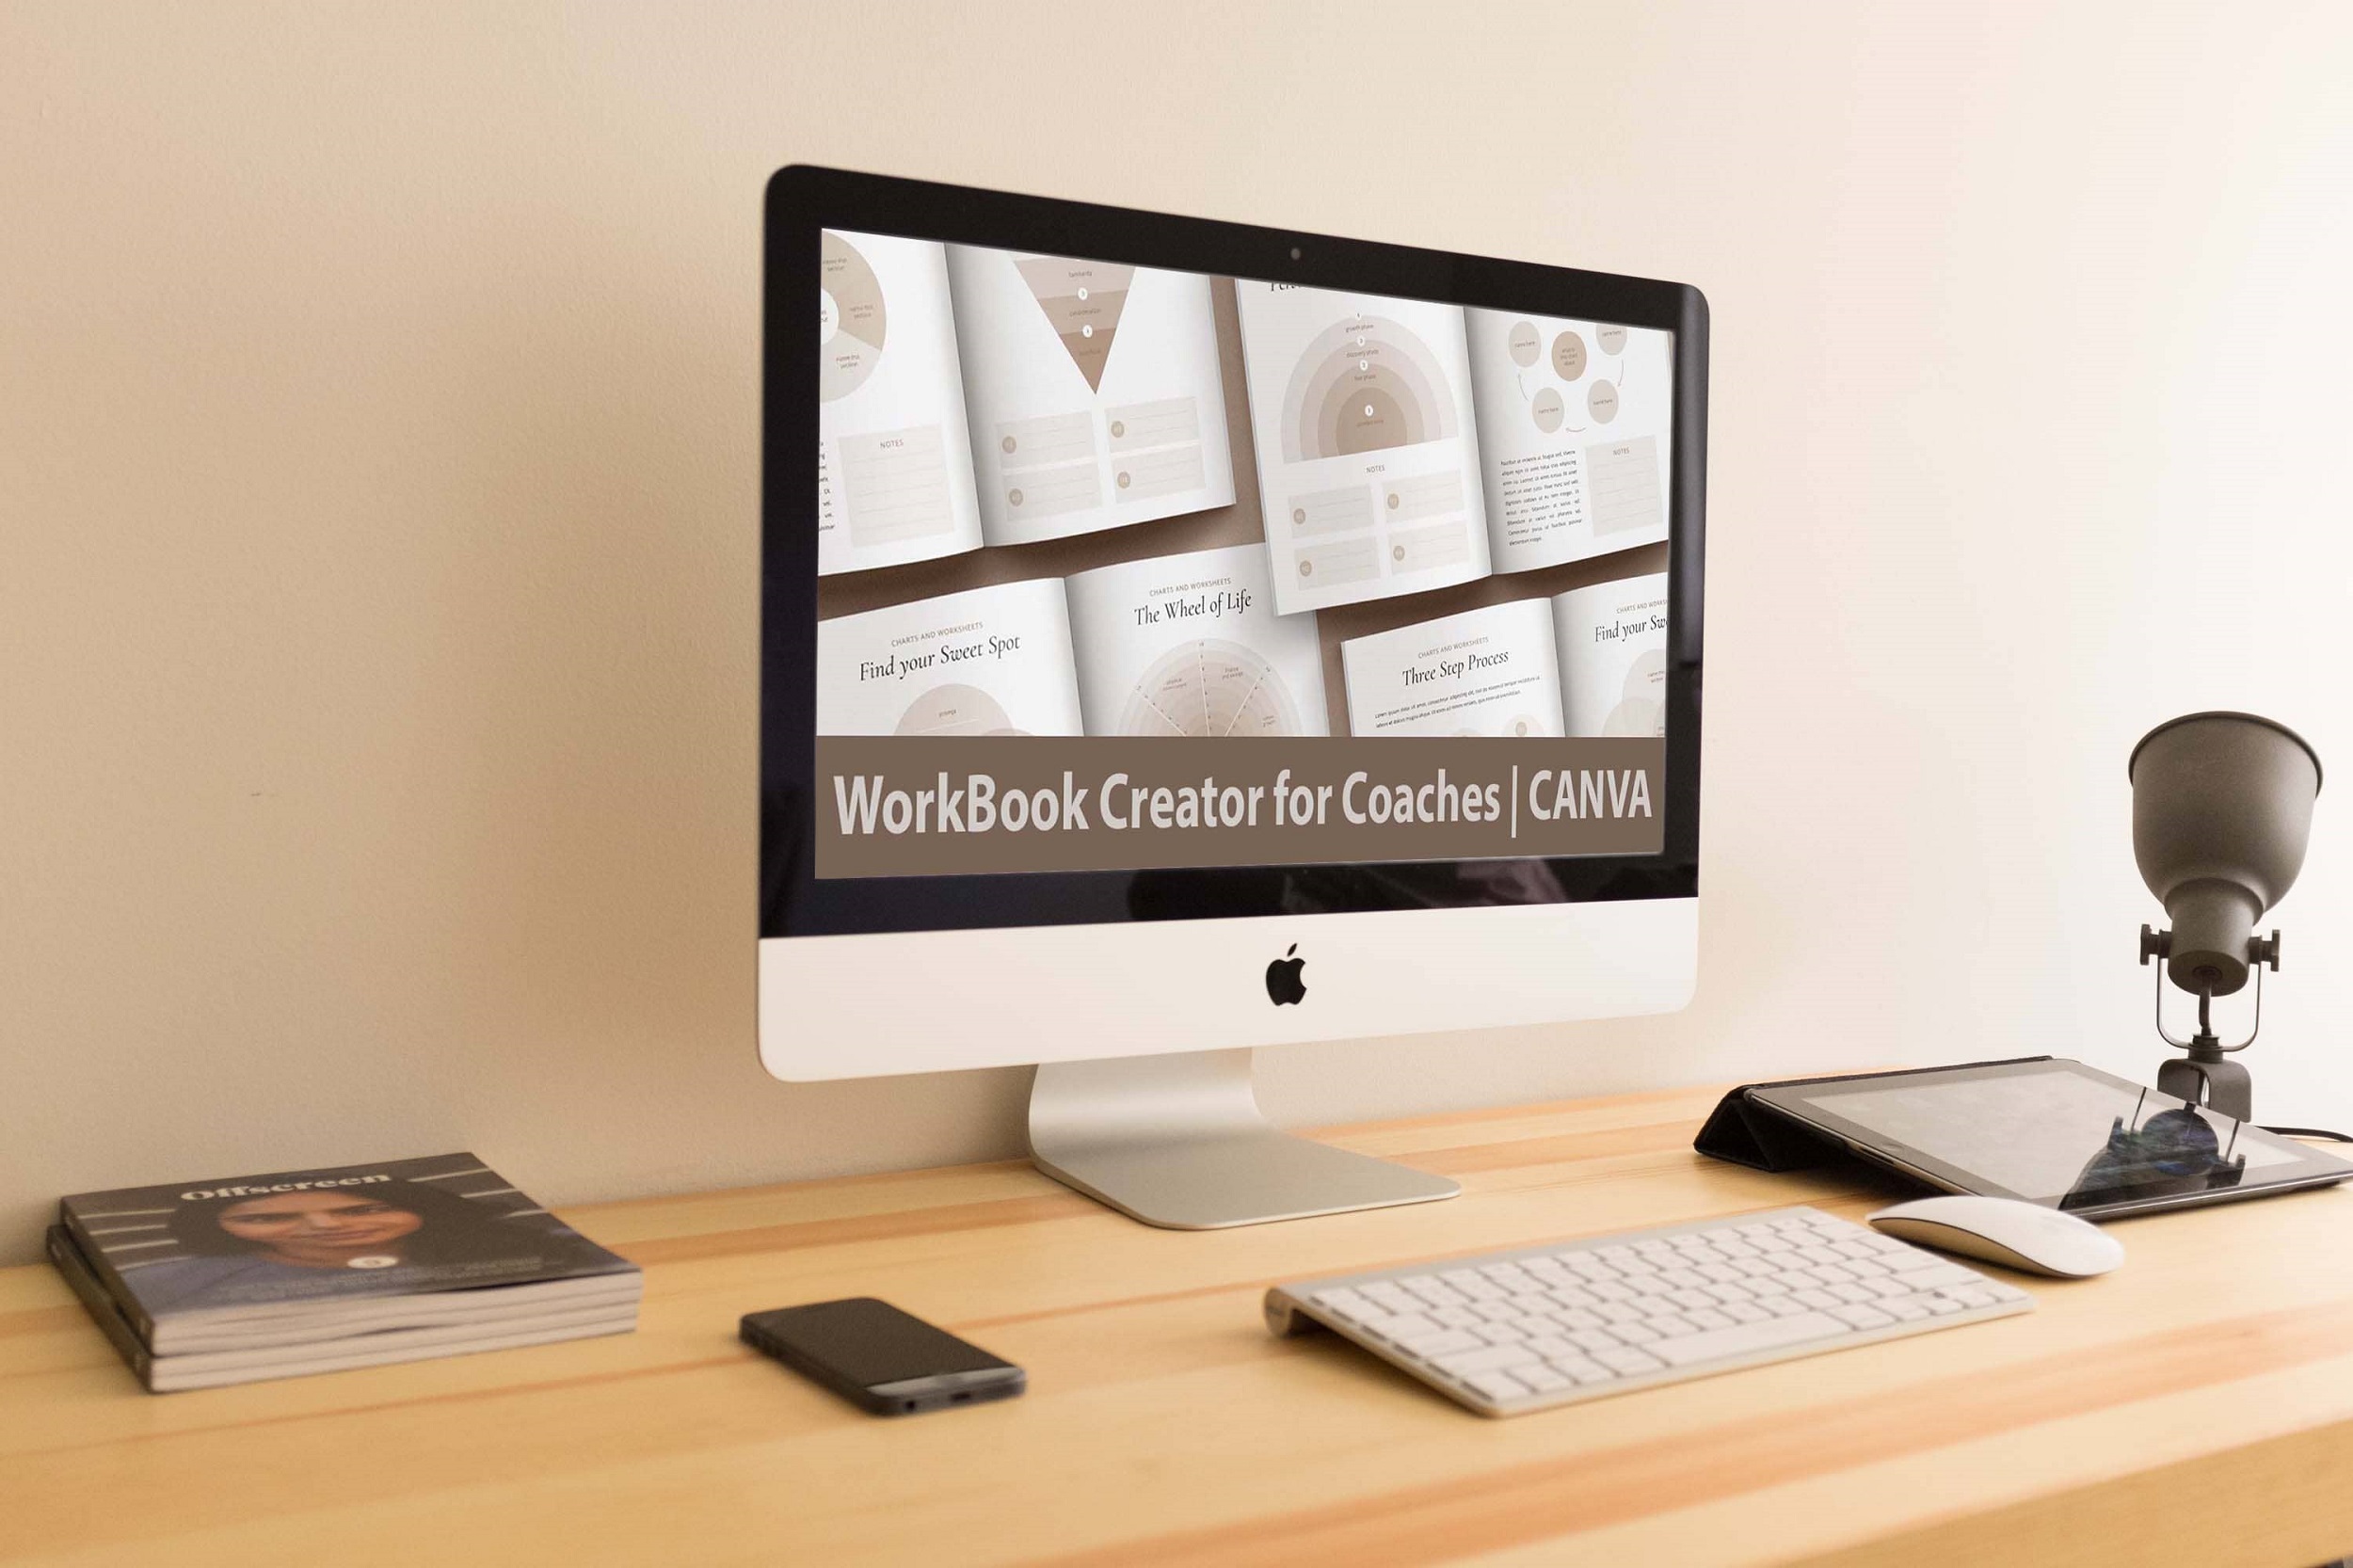 WorkBook Creator for Coaches CANVA computer mockup.